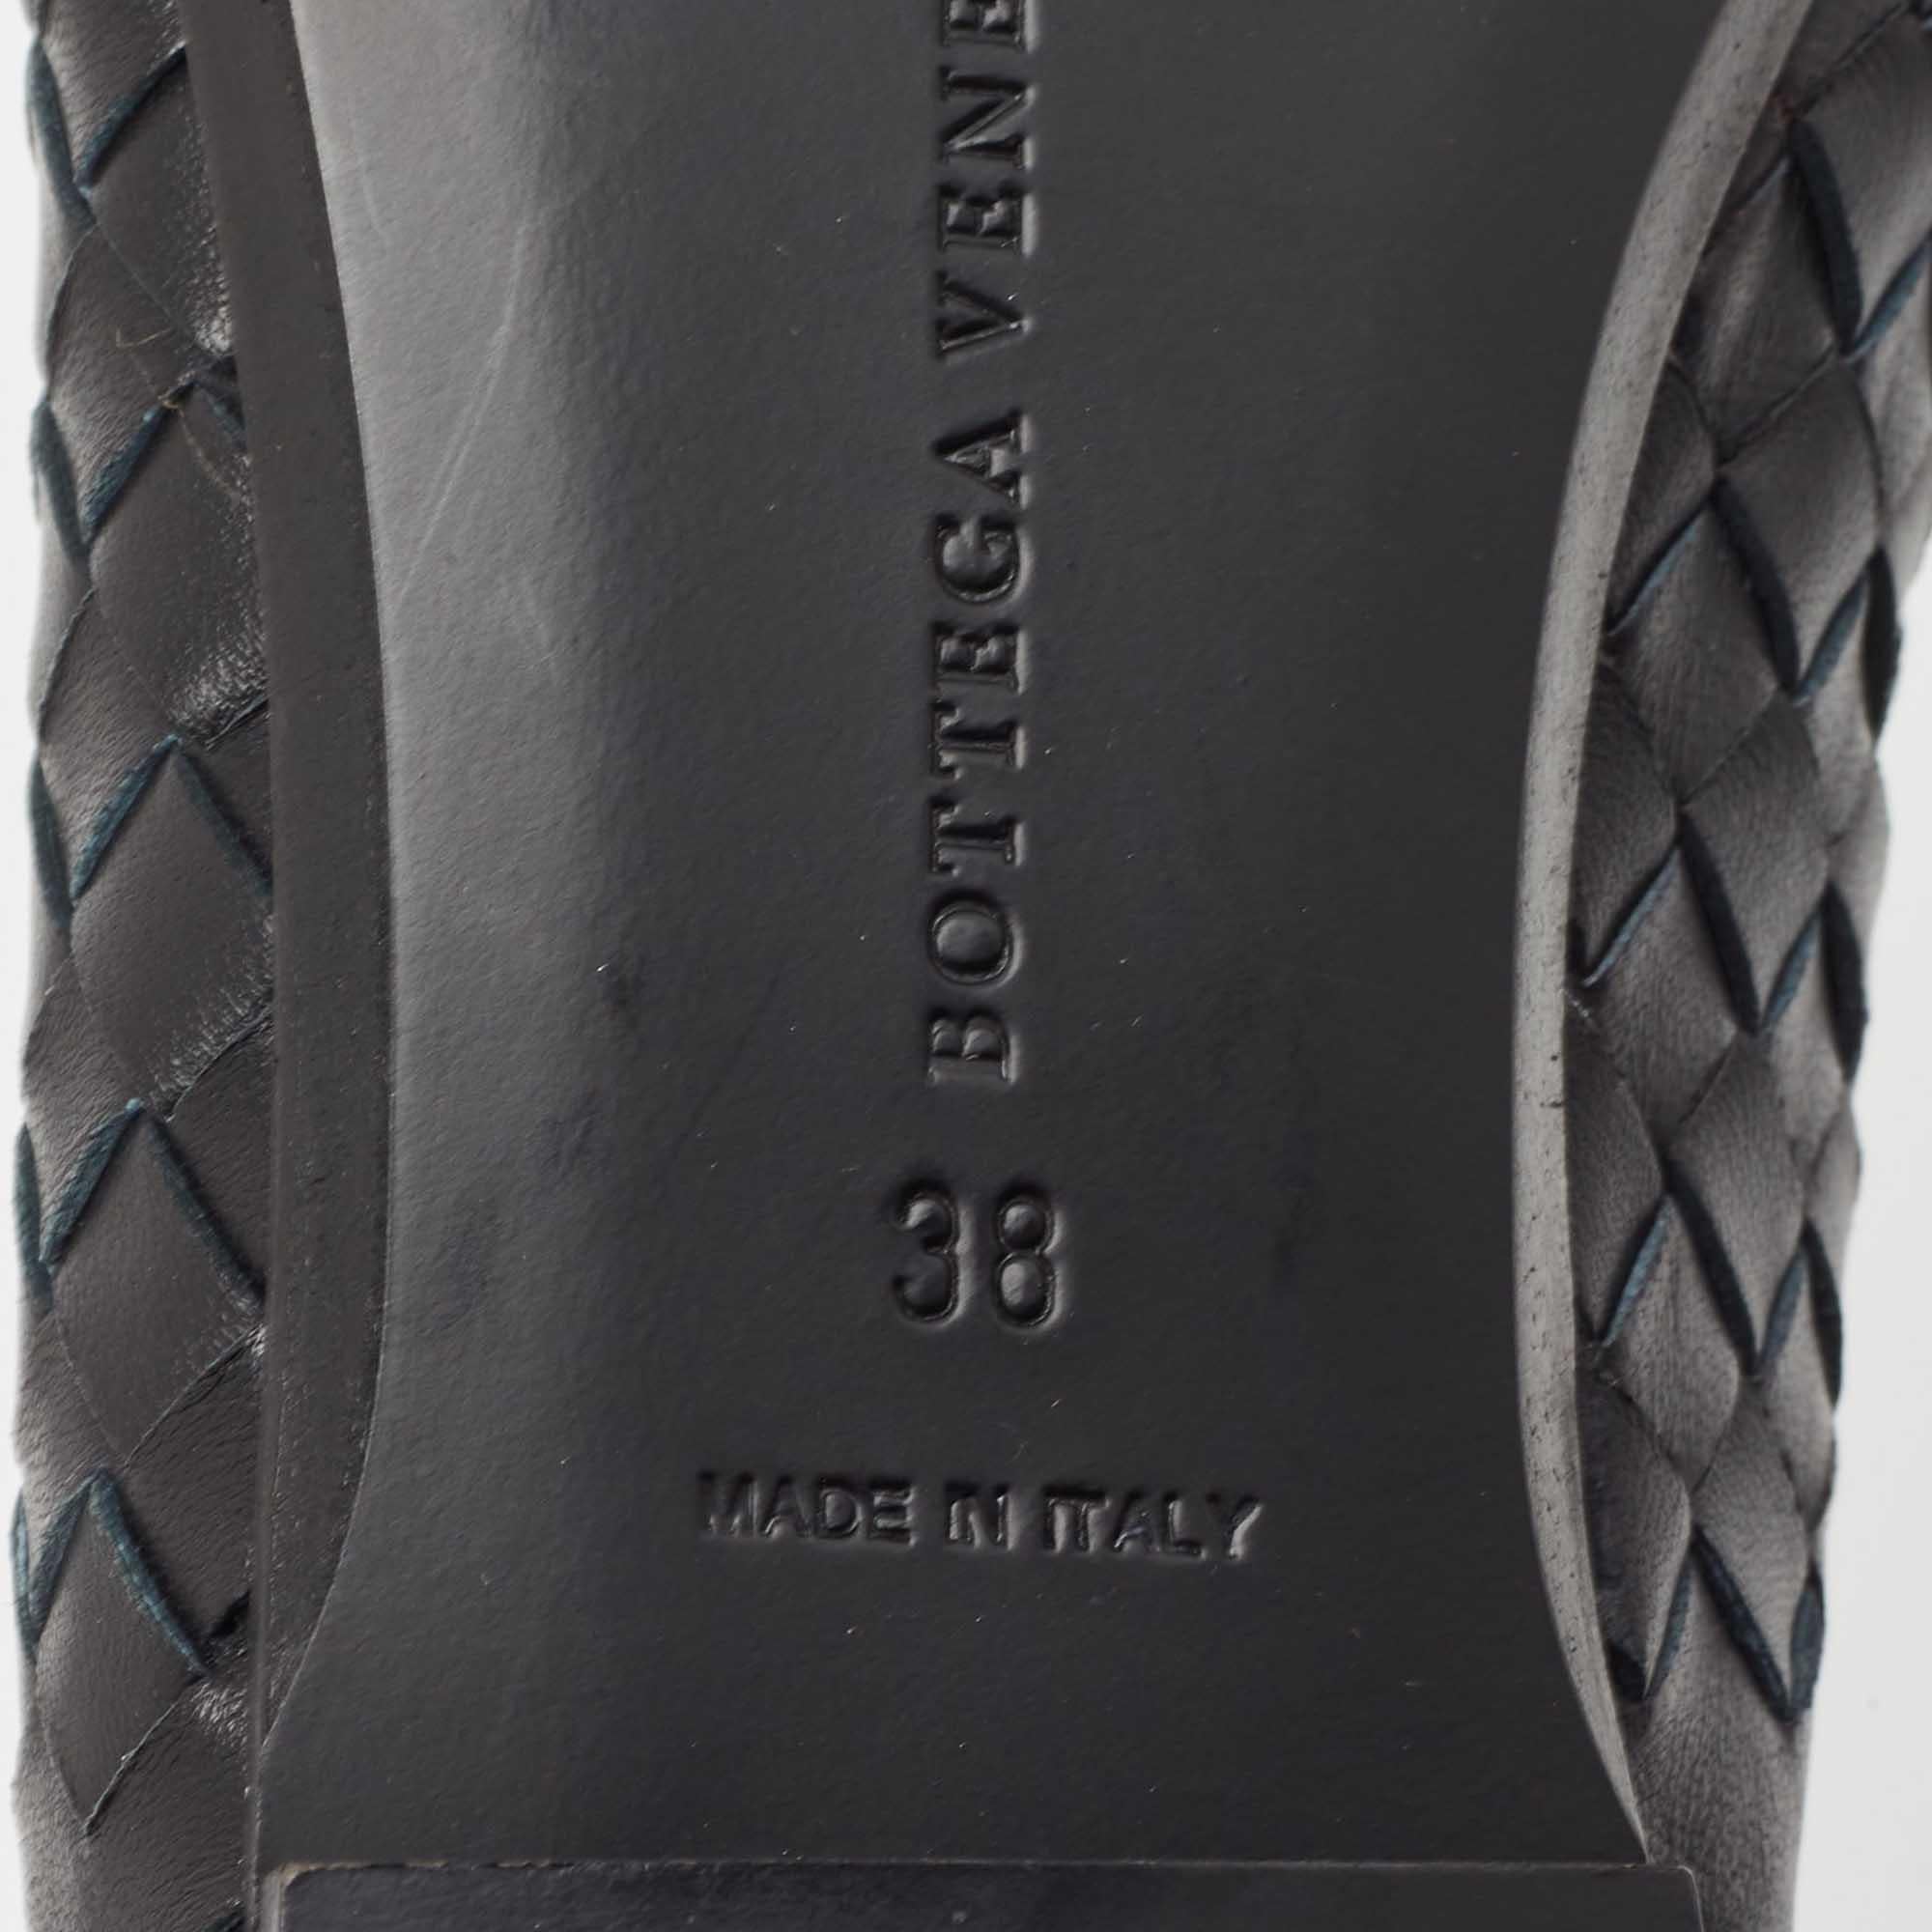 Bottega Veneta Black Leather Intrecciato Loafers Size 38 4